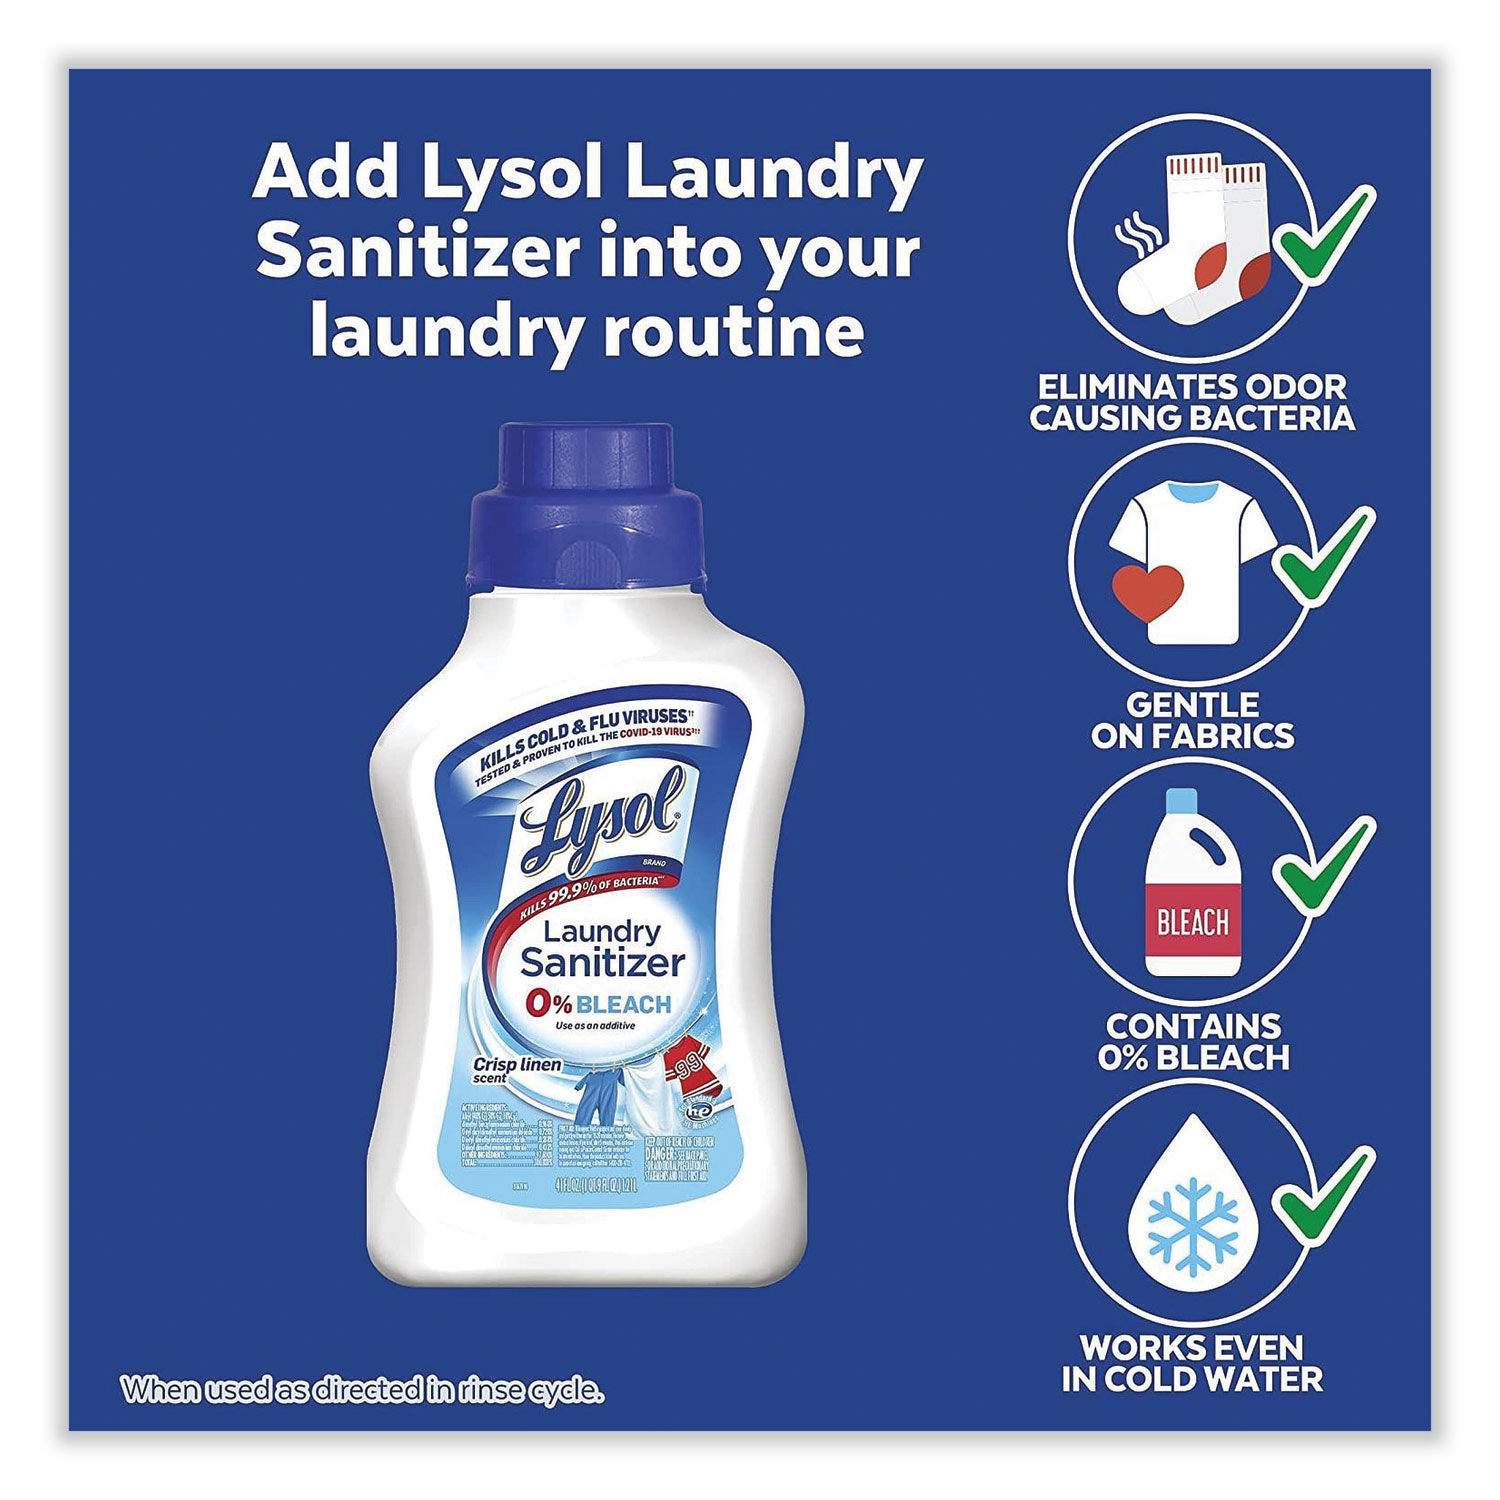 New* Clorox Laundry Sanitizer Deals Clorox Laundry Sanitizer Coupon